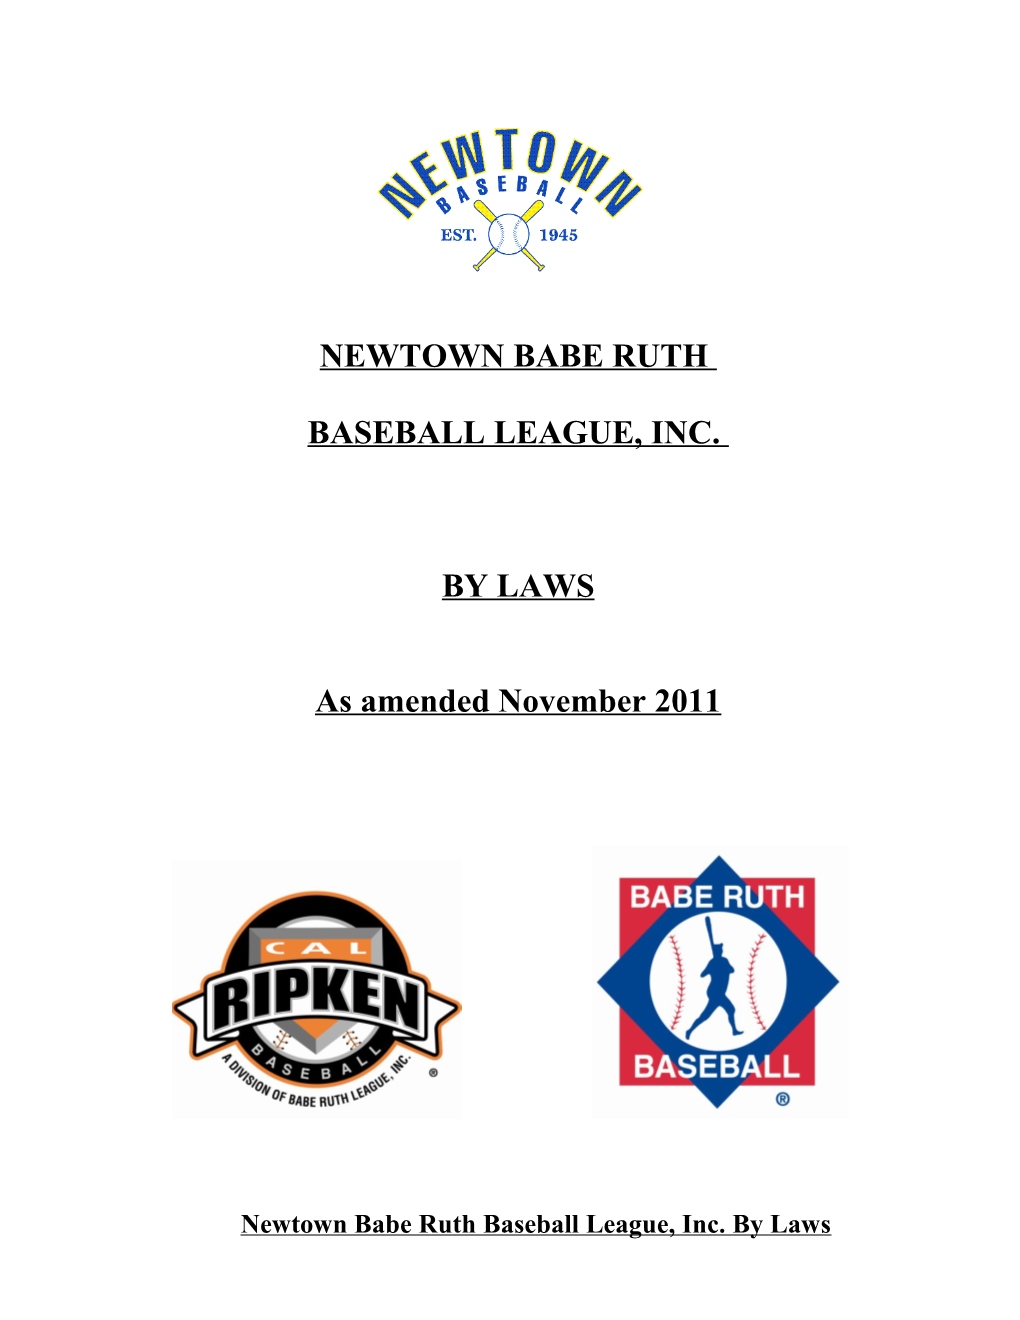 Newtown Babe Ruth Baseball League, Inc. by Laws